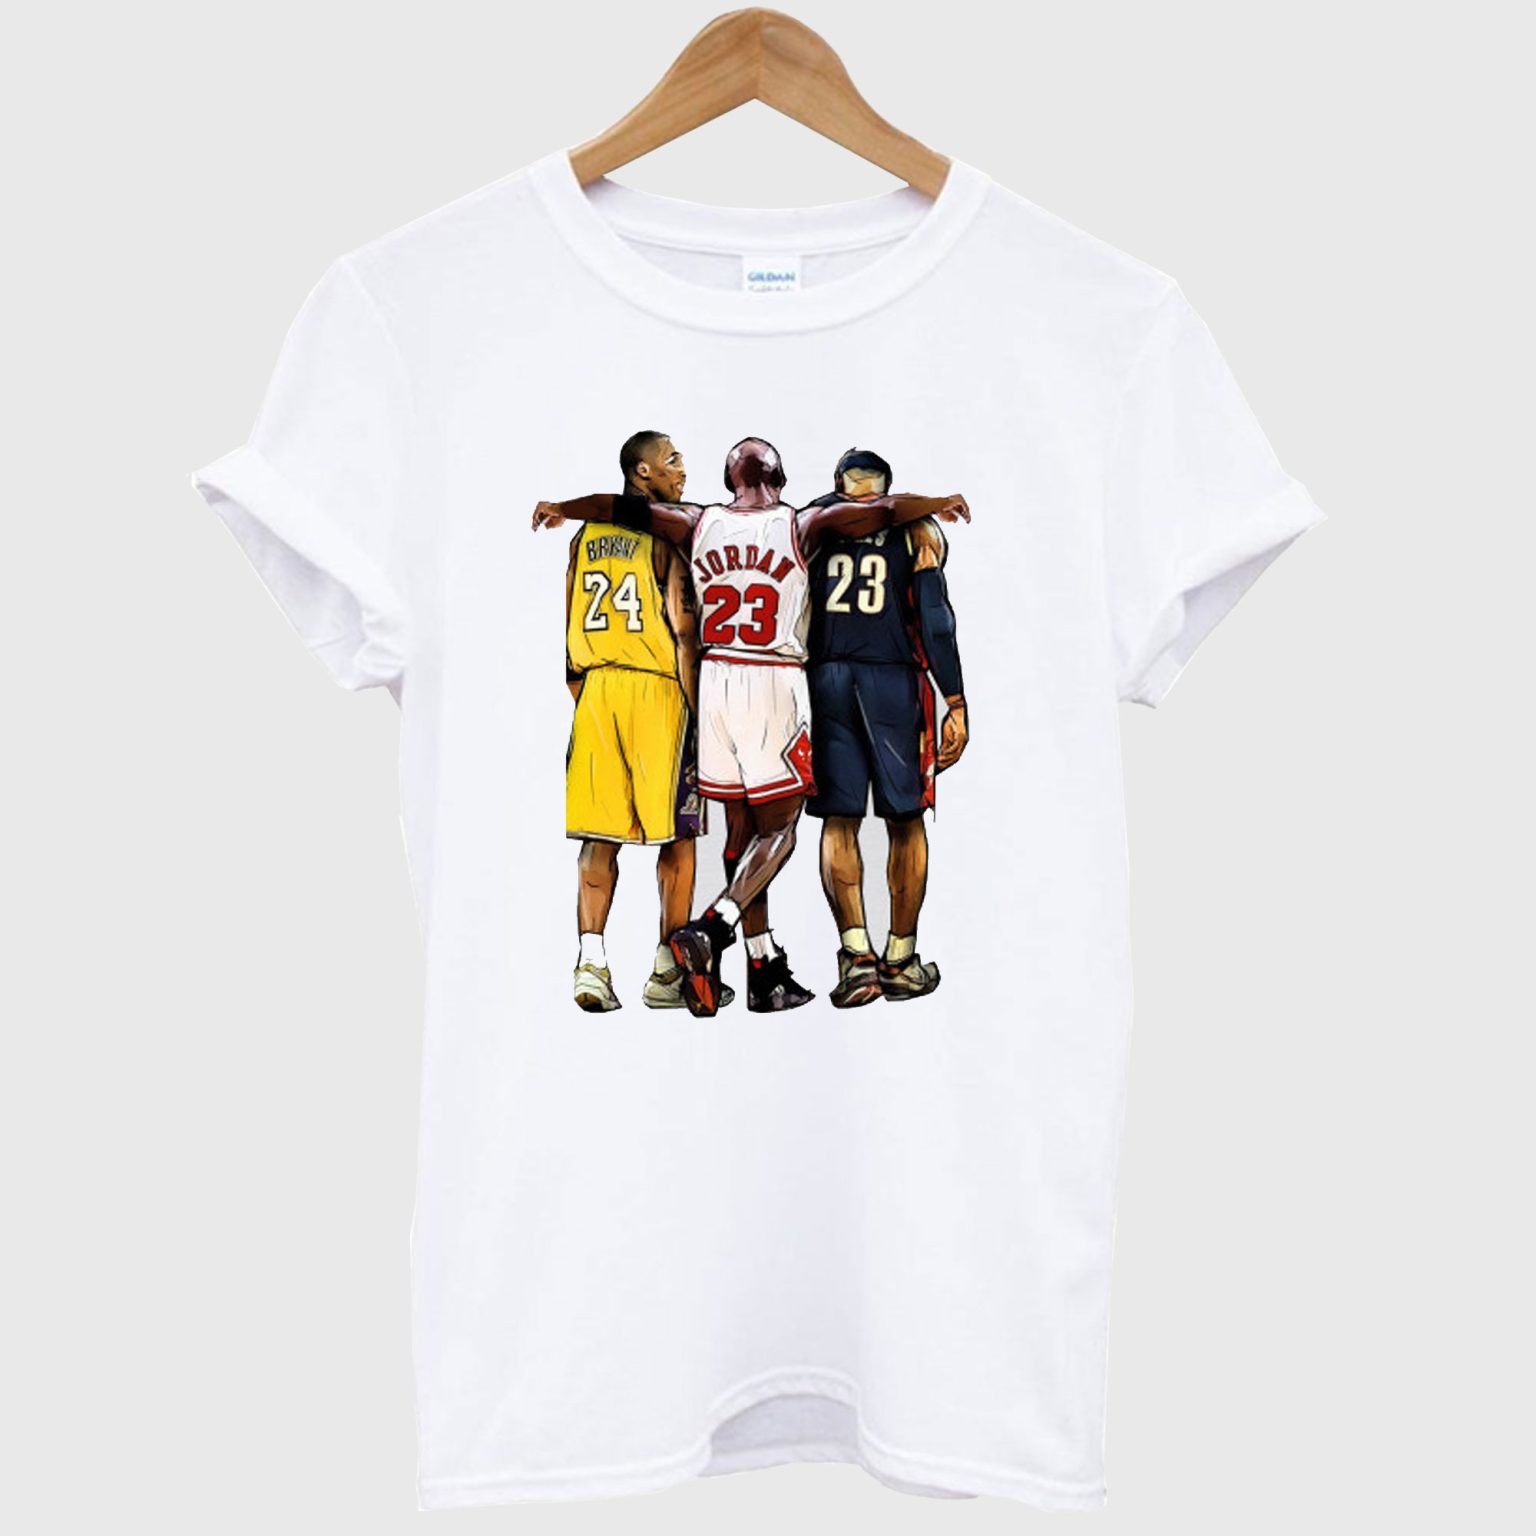 Lebron James Michael Jordan Kobe Bryant Great Star NBA Basketball T shirt